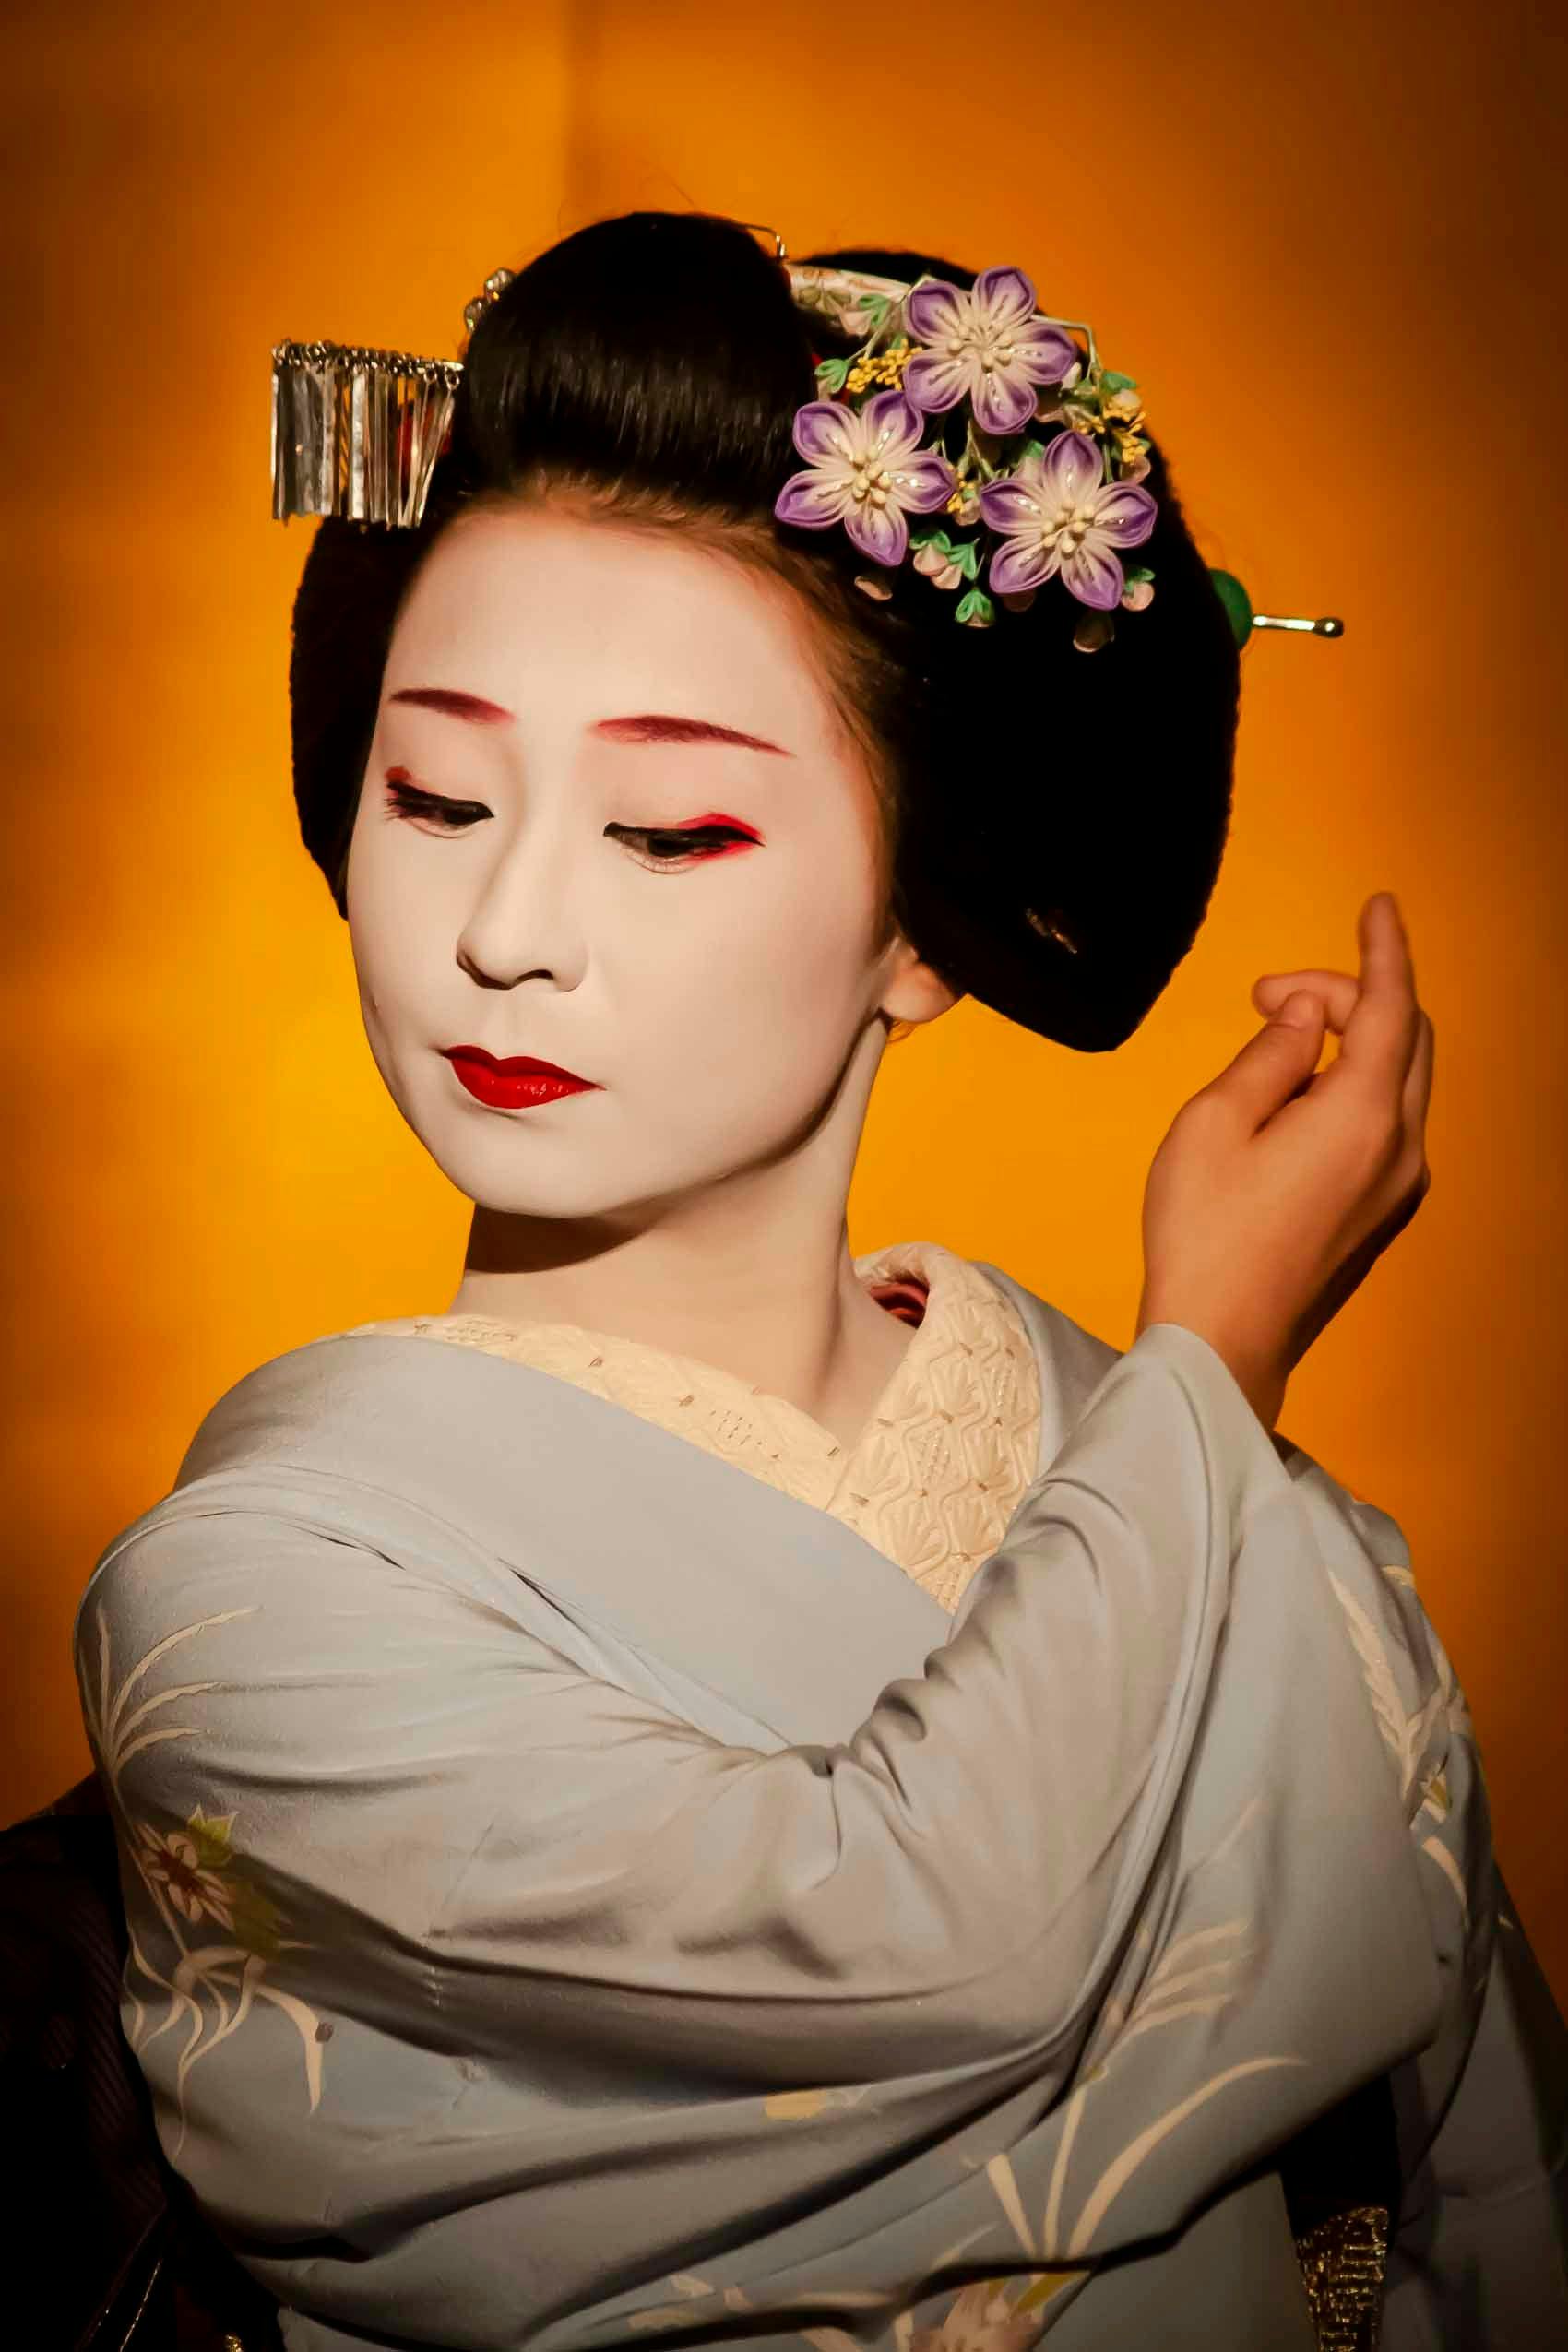 Maiko, trainee geisha. Source: James Saunders-Wyndham